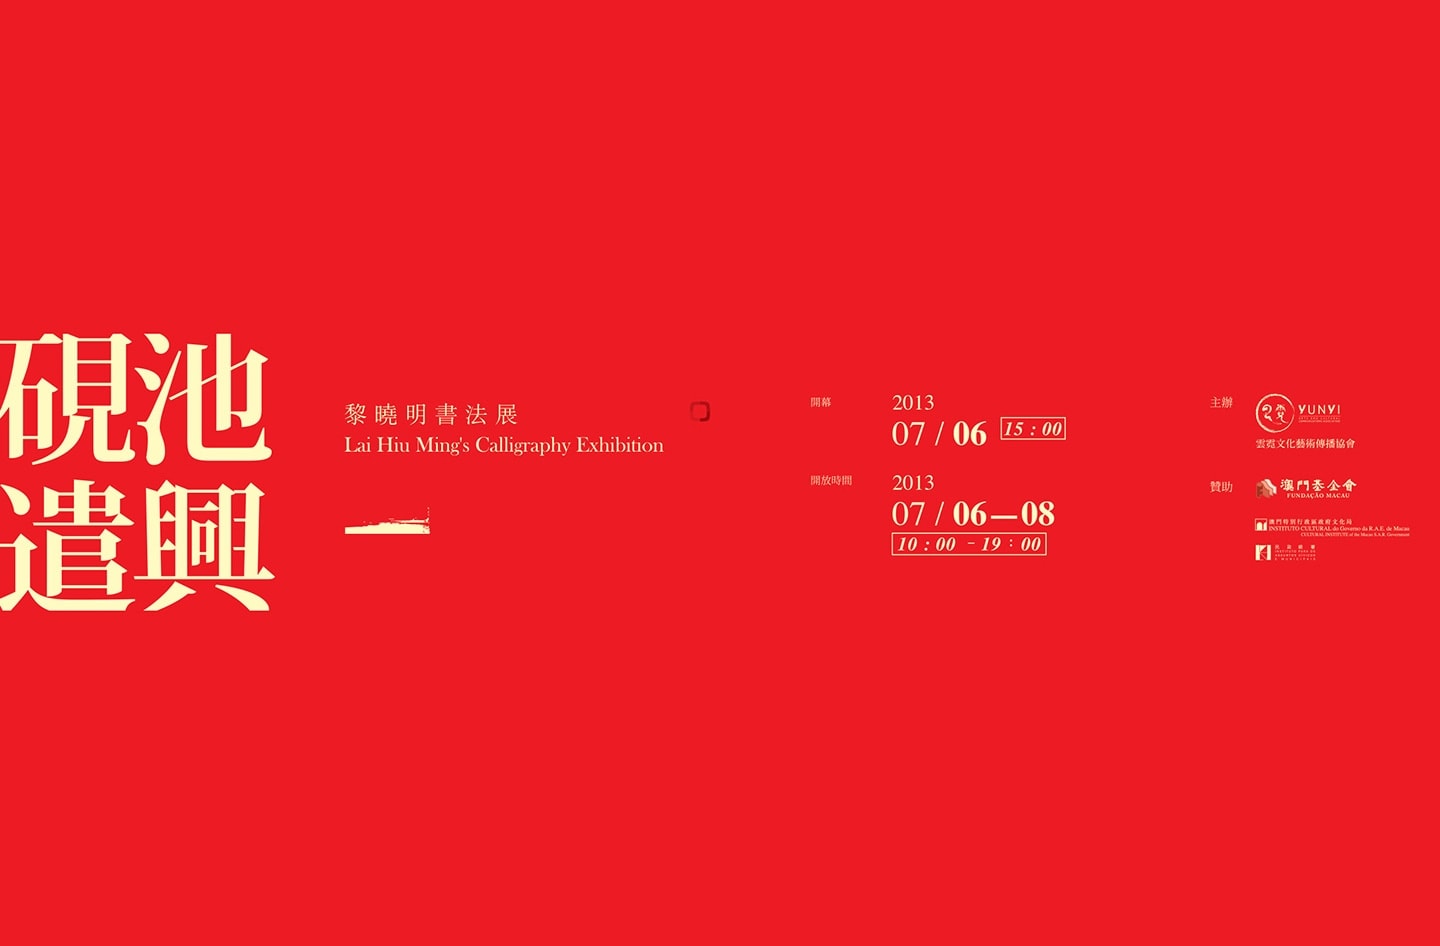 Lai Hiu Ming’s Calligraphy Exhibition